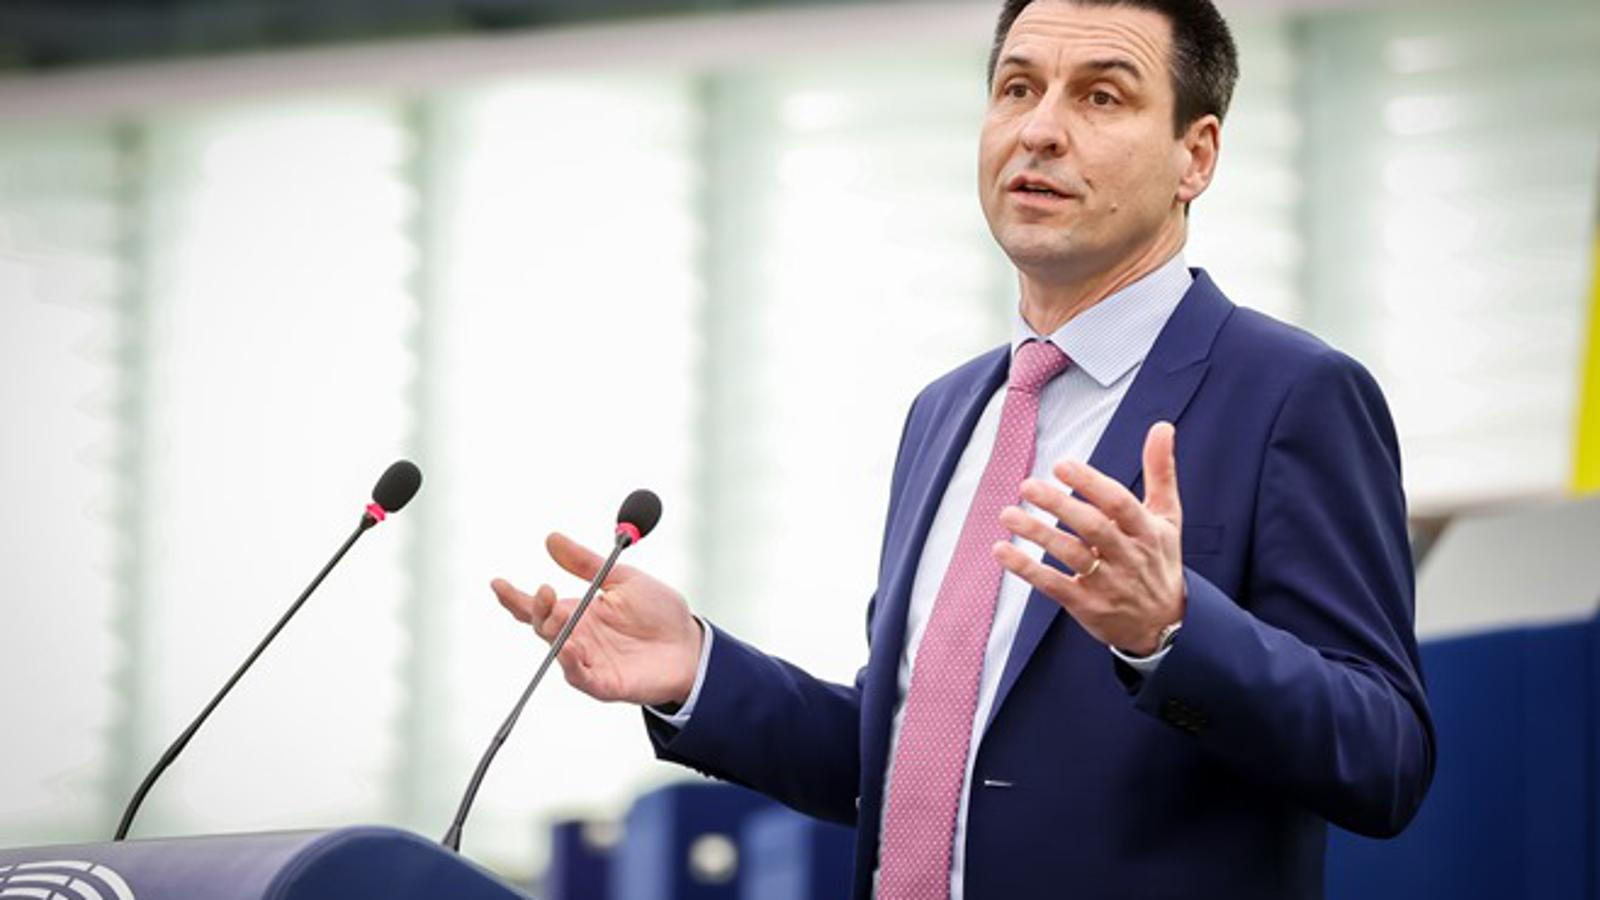 Hrvatski zastupnik u Europskom parlamentu, Ladislav Ilčić